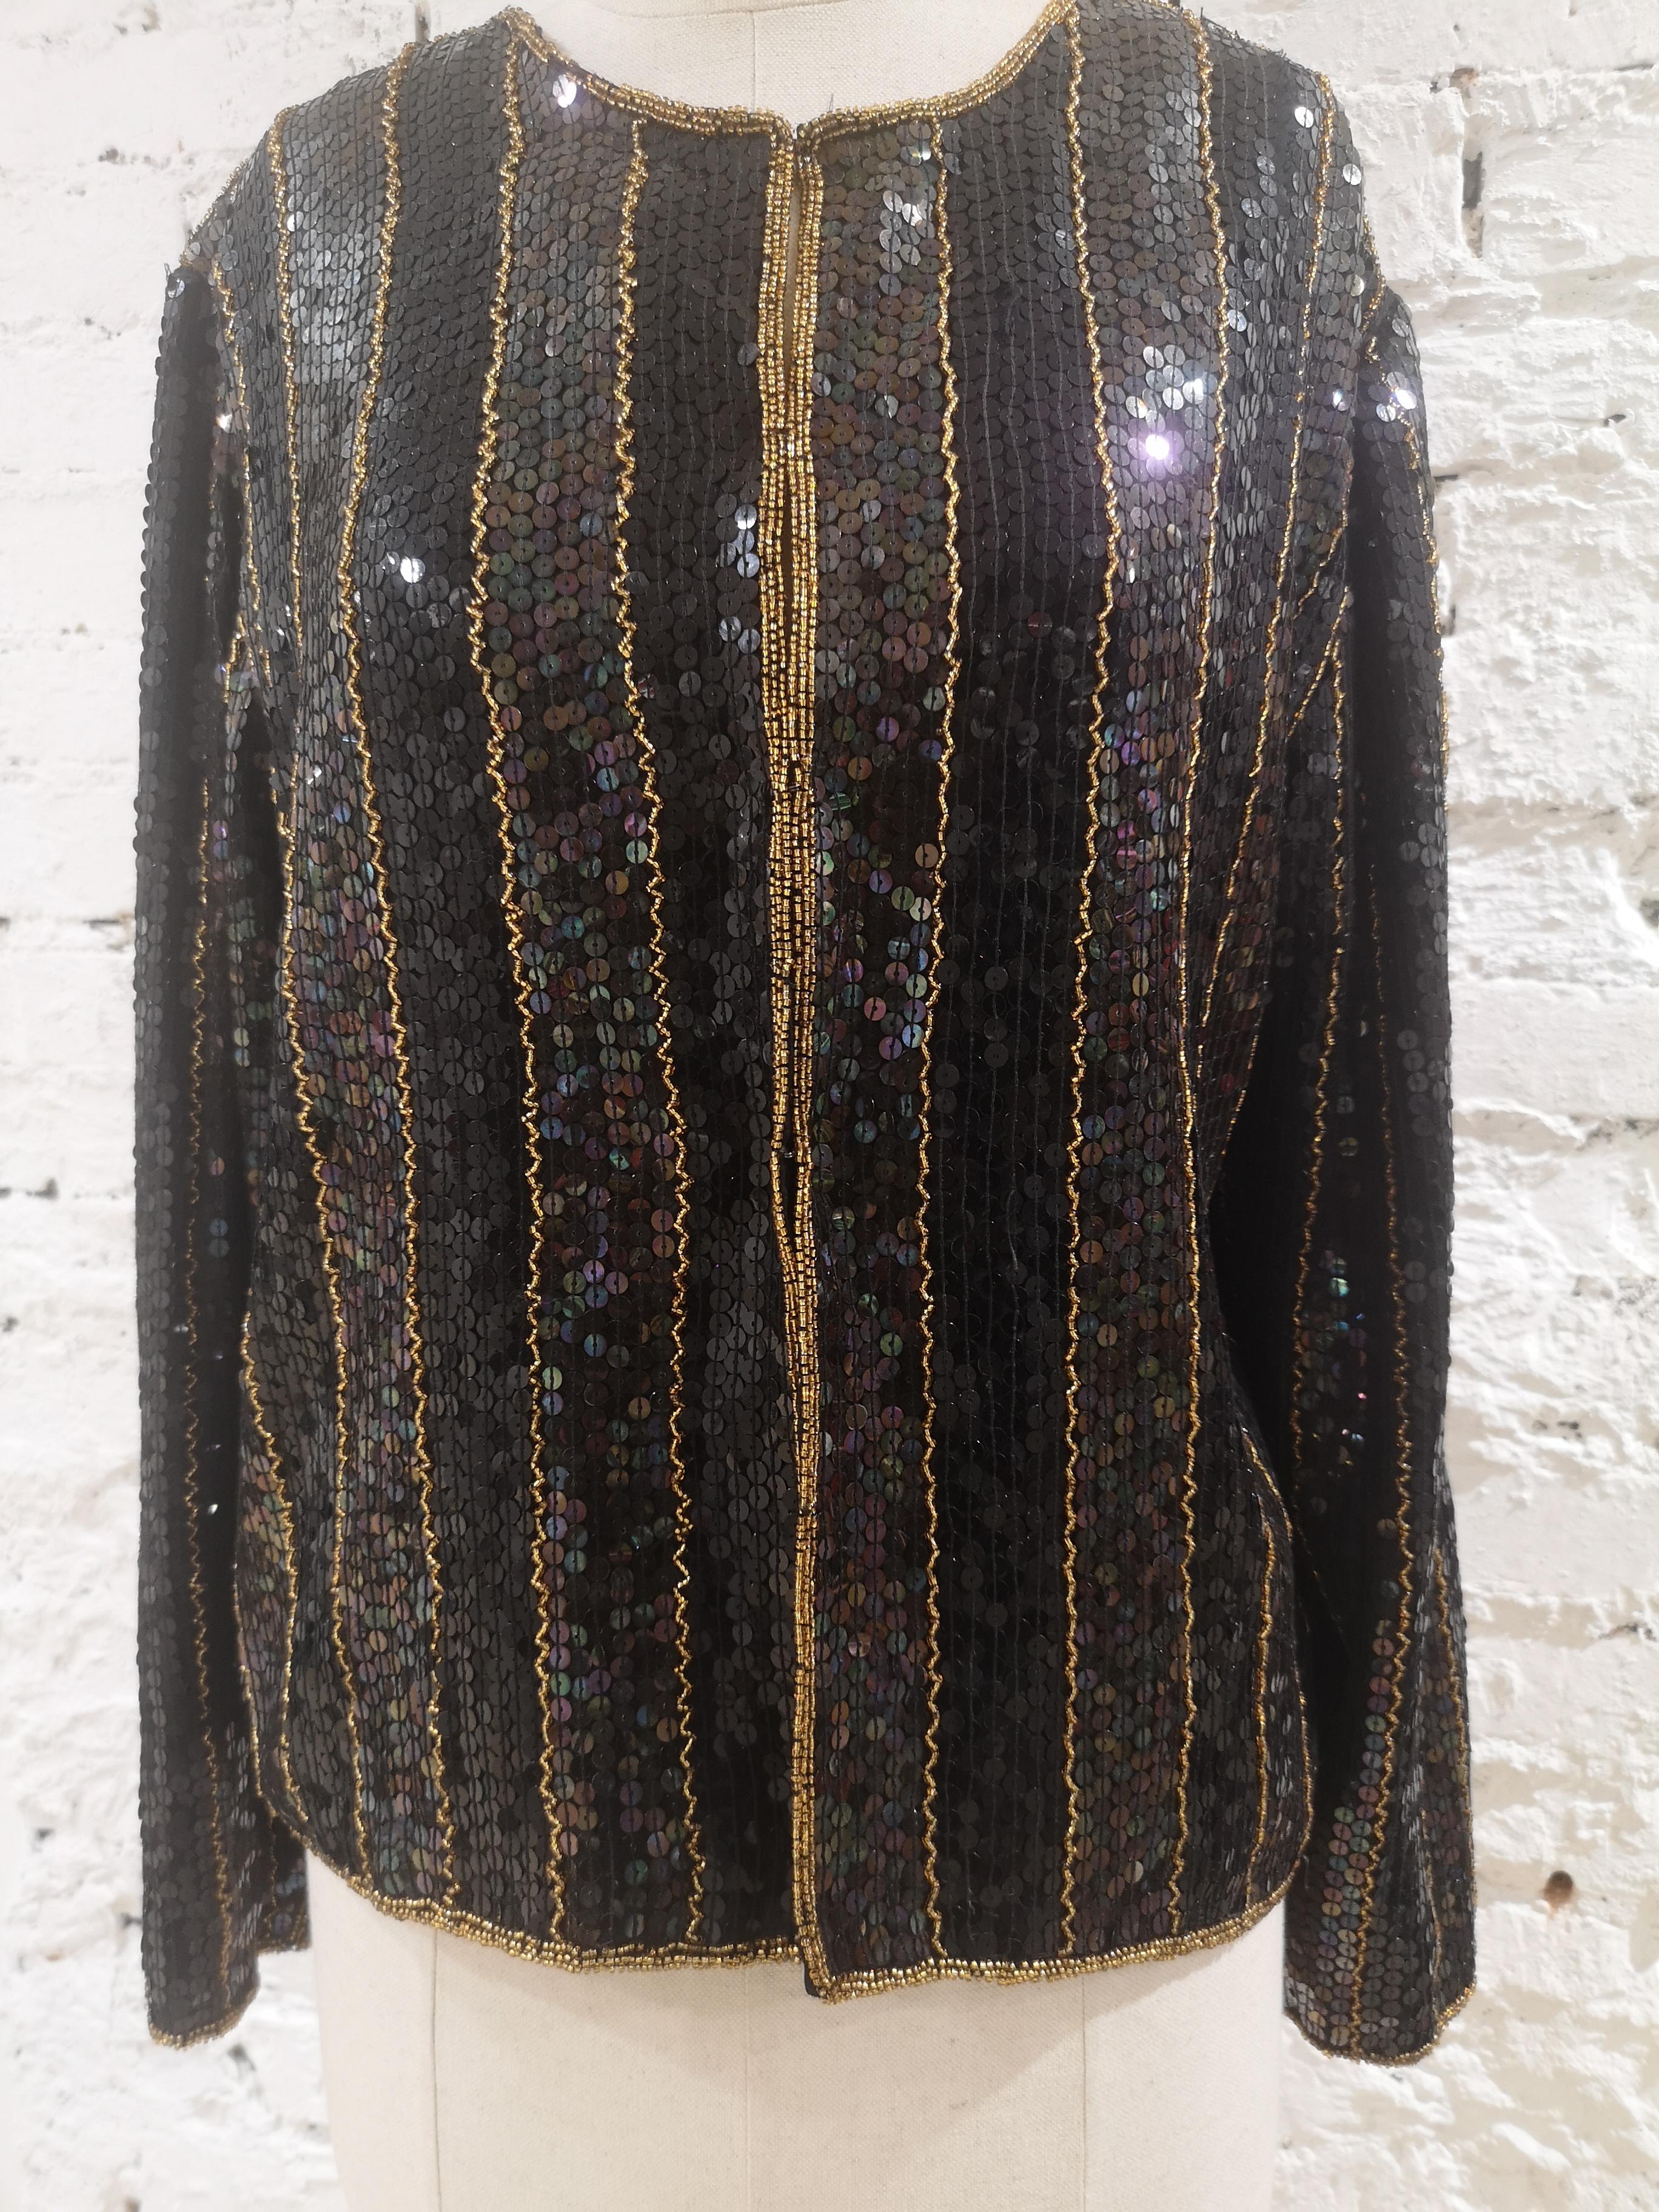 Vintage black sequins gold beads jacket
totally made in italy in size M
total lenght 58 cm
shoulder to hem 58 cm